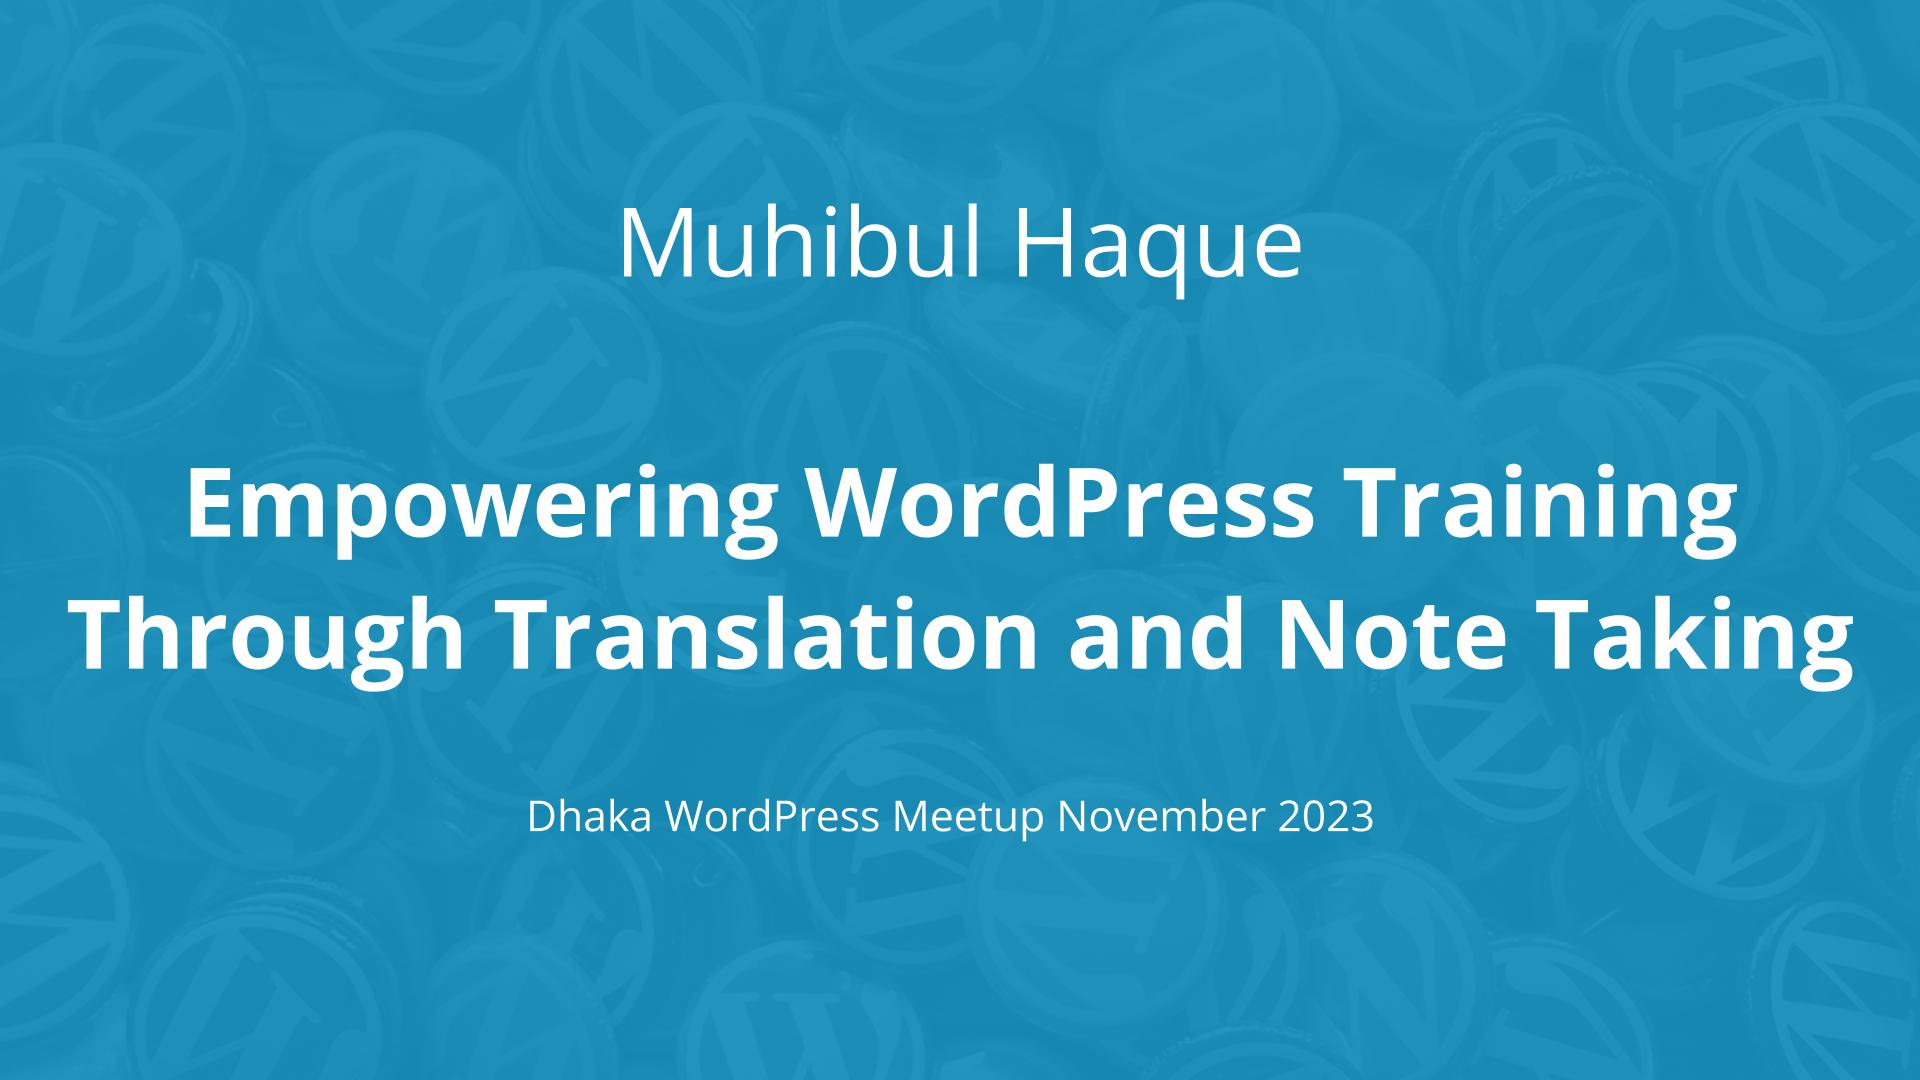 Muhibul Haque: Empowering WordPress Training through Translation and Note Taking